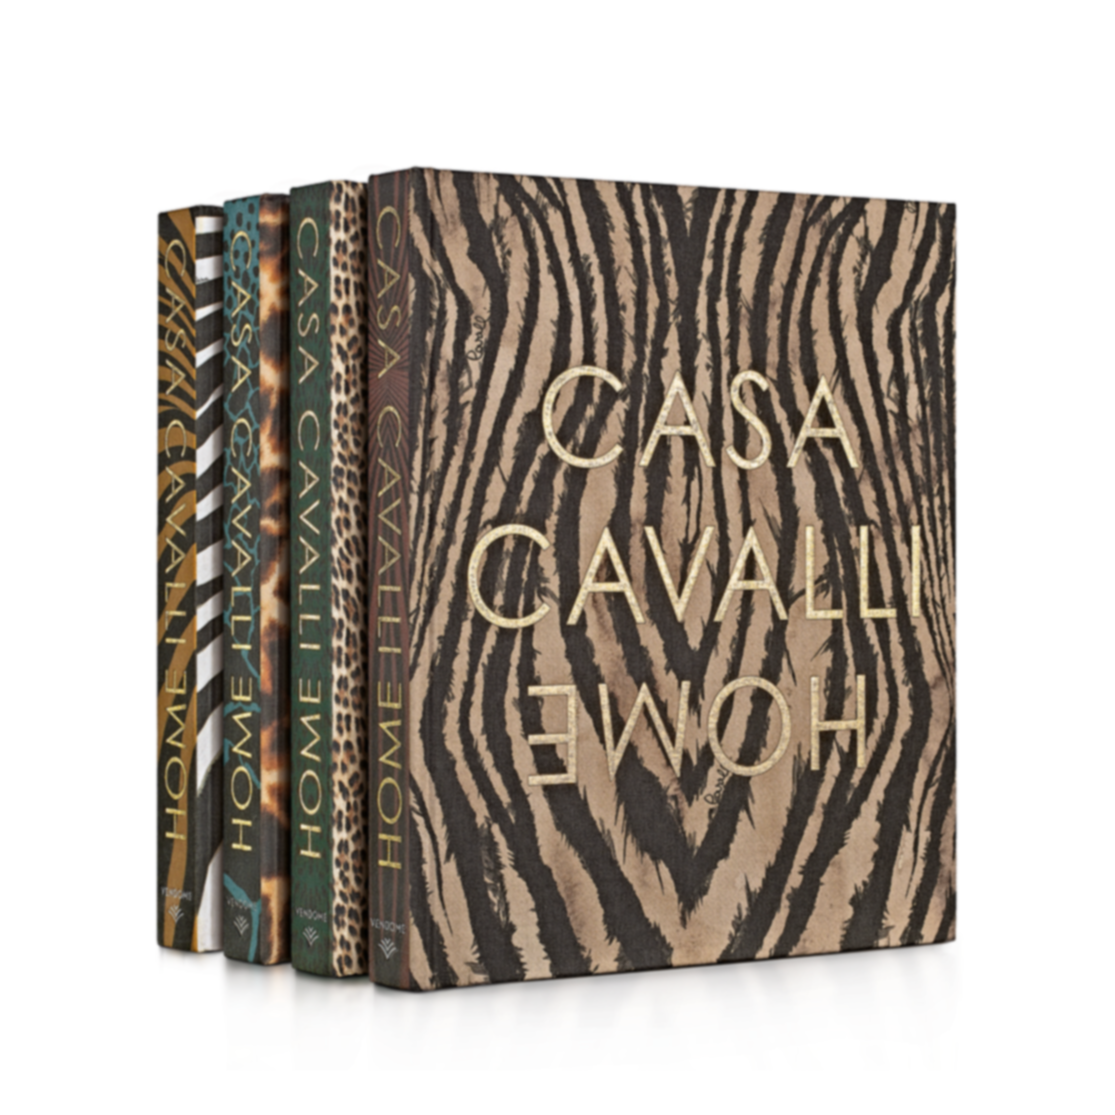 Casa Cavalli Home - Signature Edition